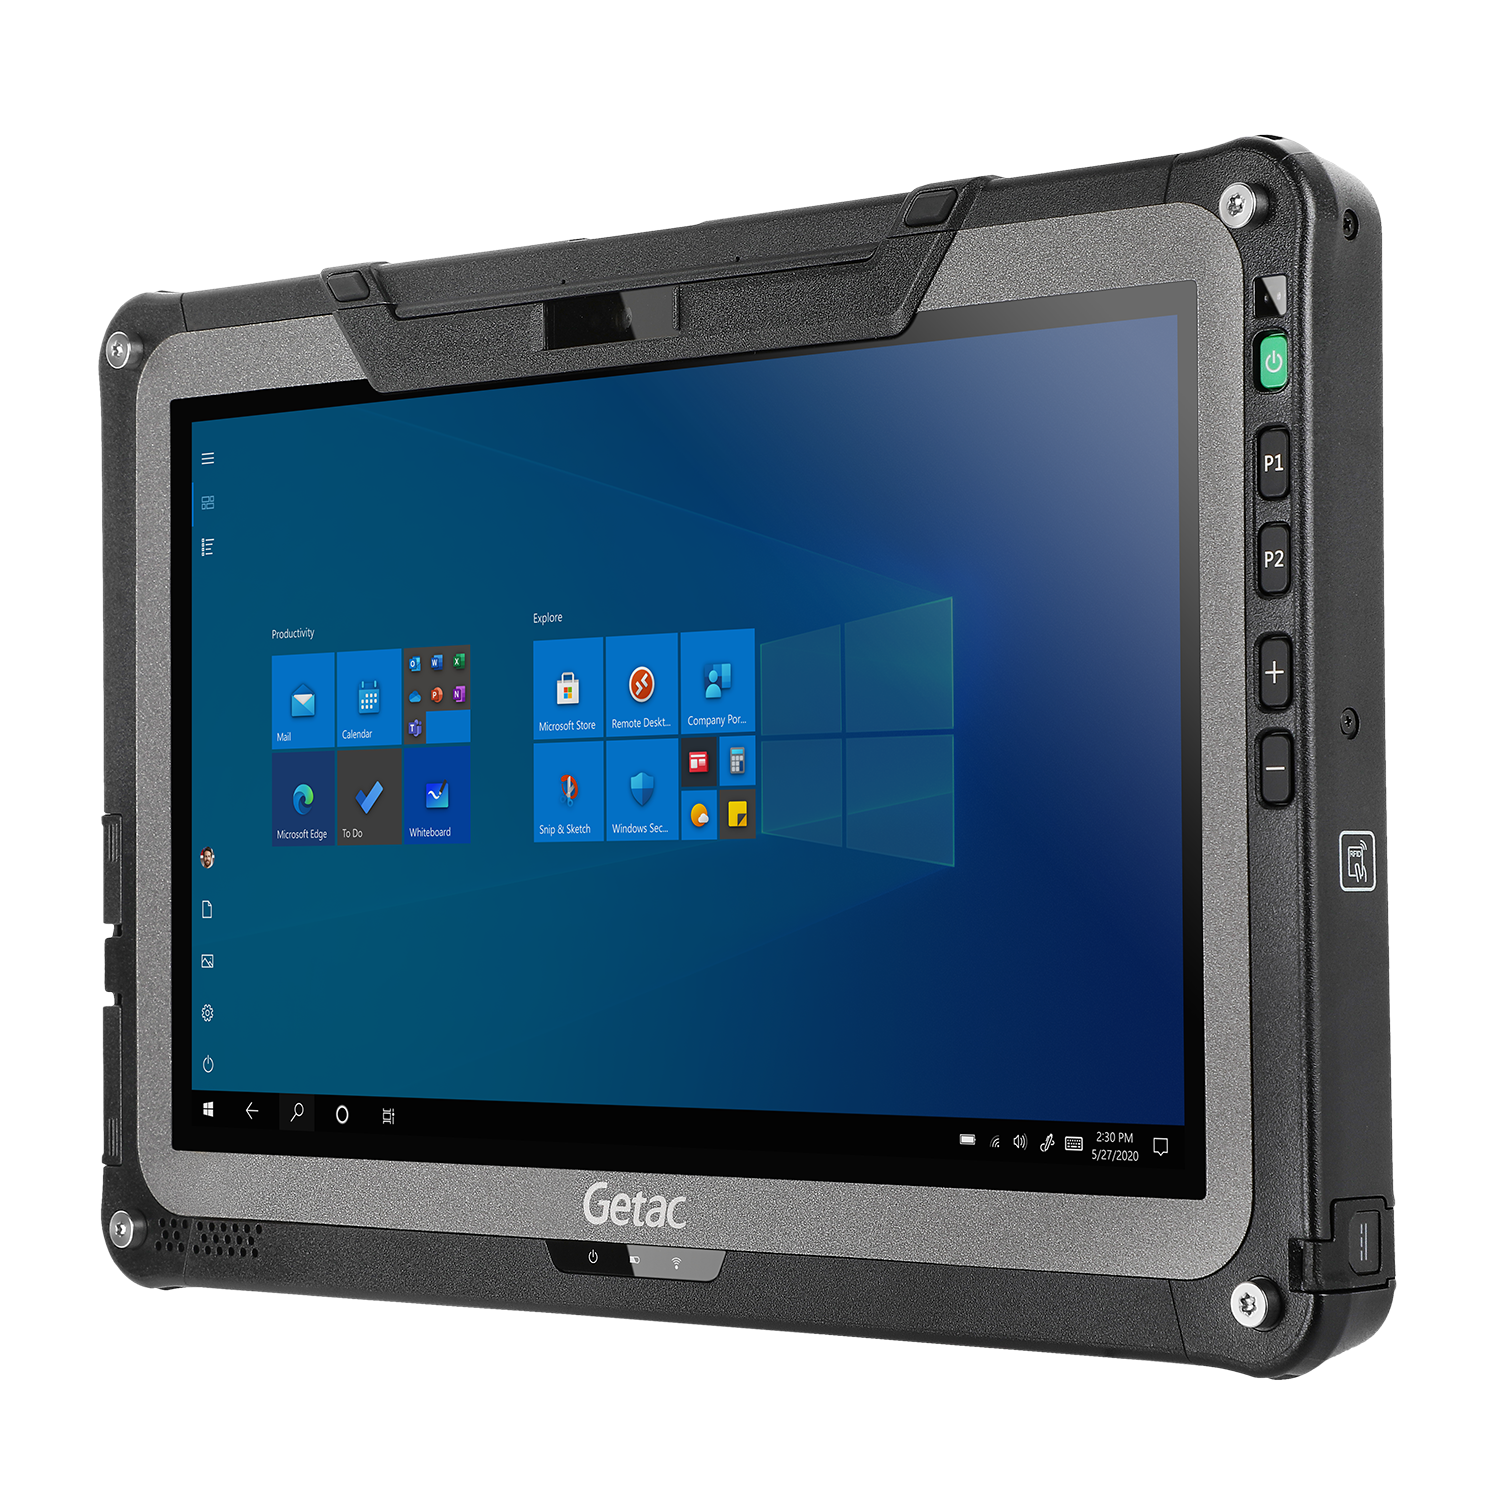 Getac F110,  la nuova generazione di tablet fully rugged